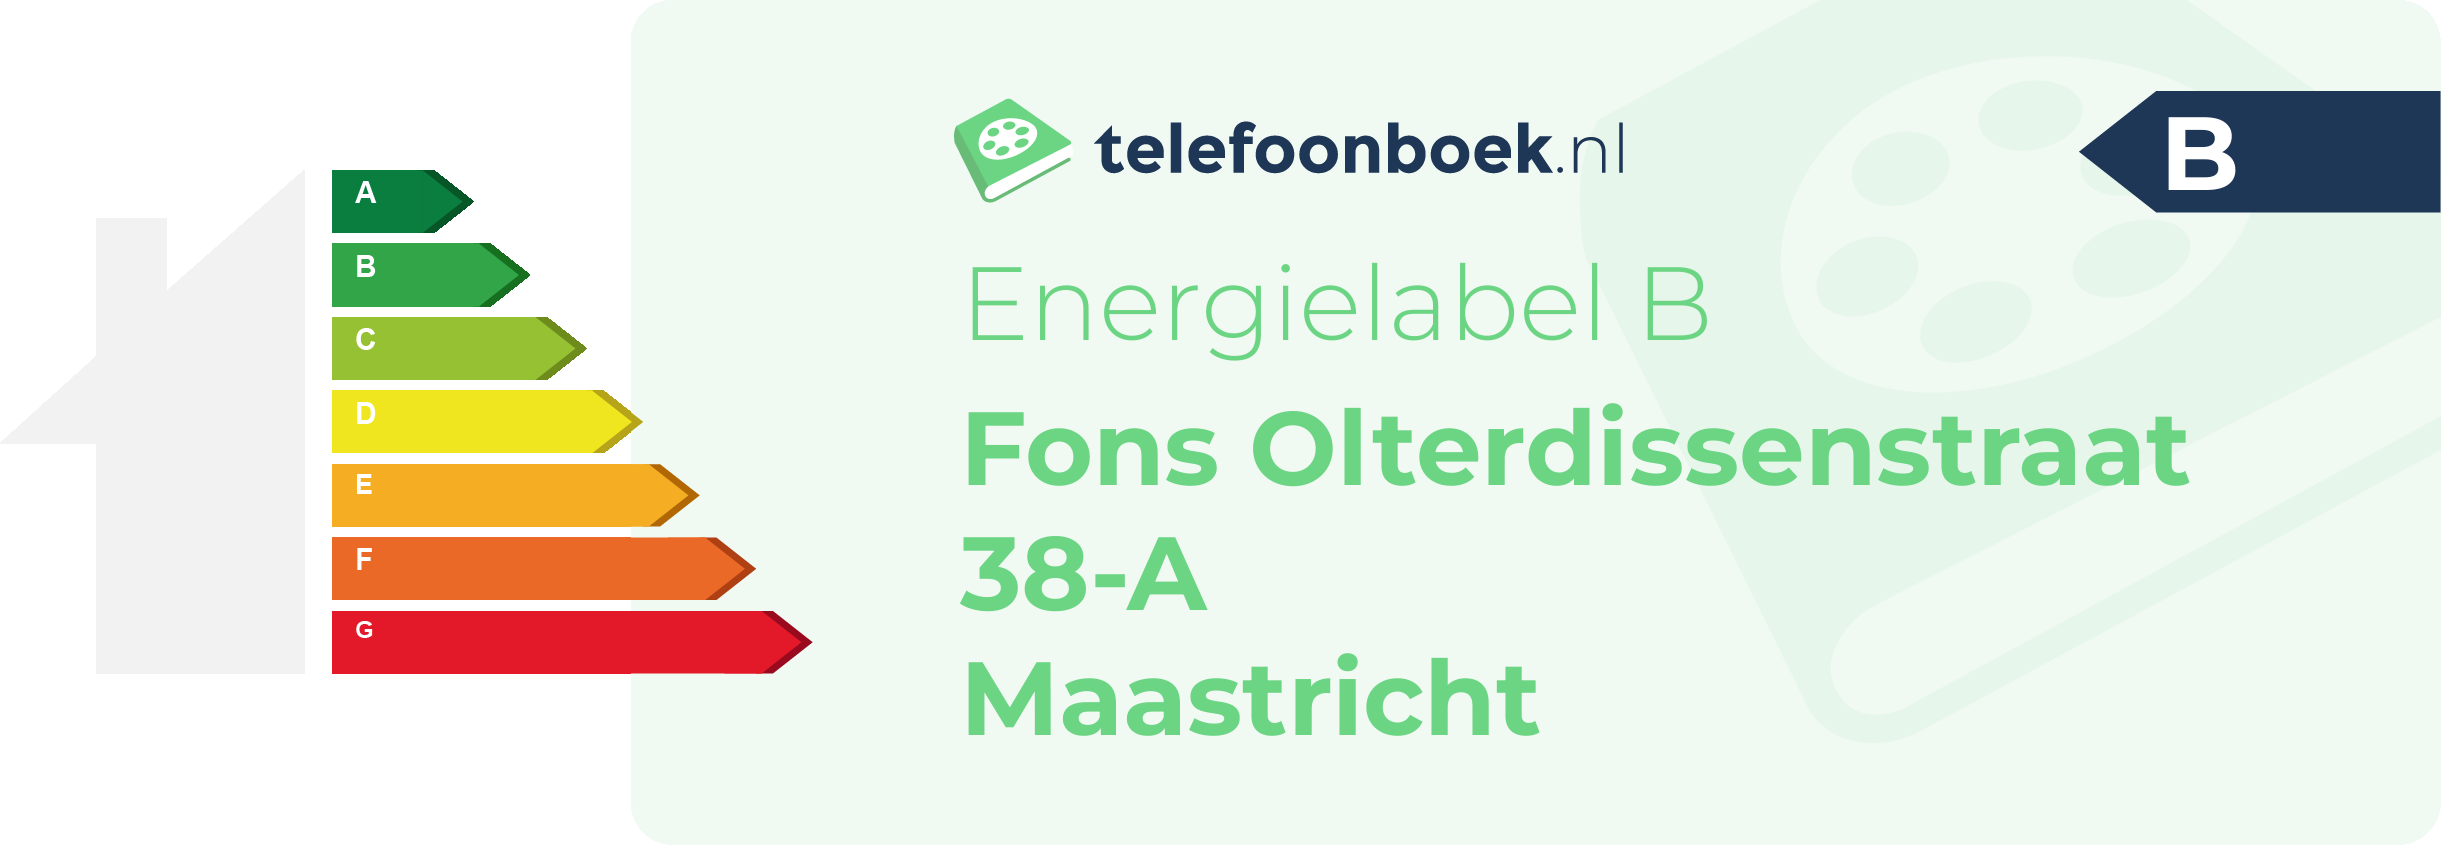 Energielabel Fons Olterdissenstraat 38-A Maastricht